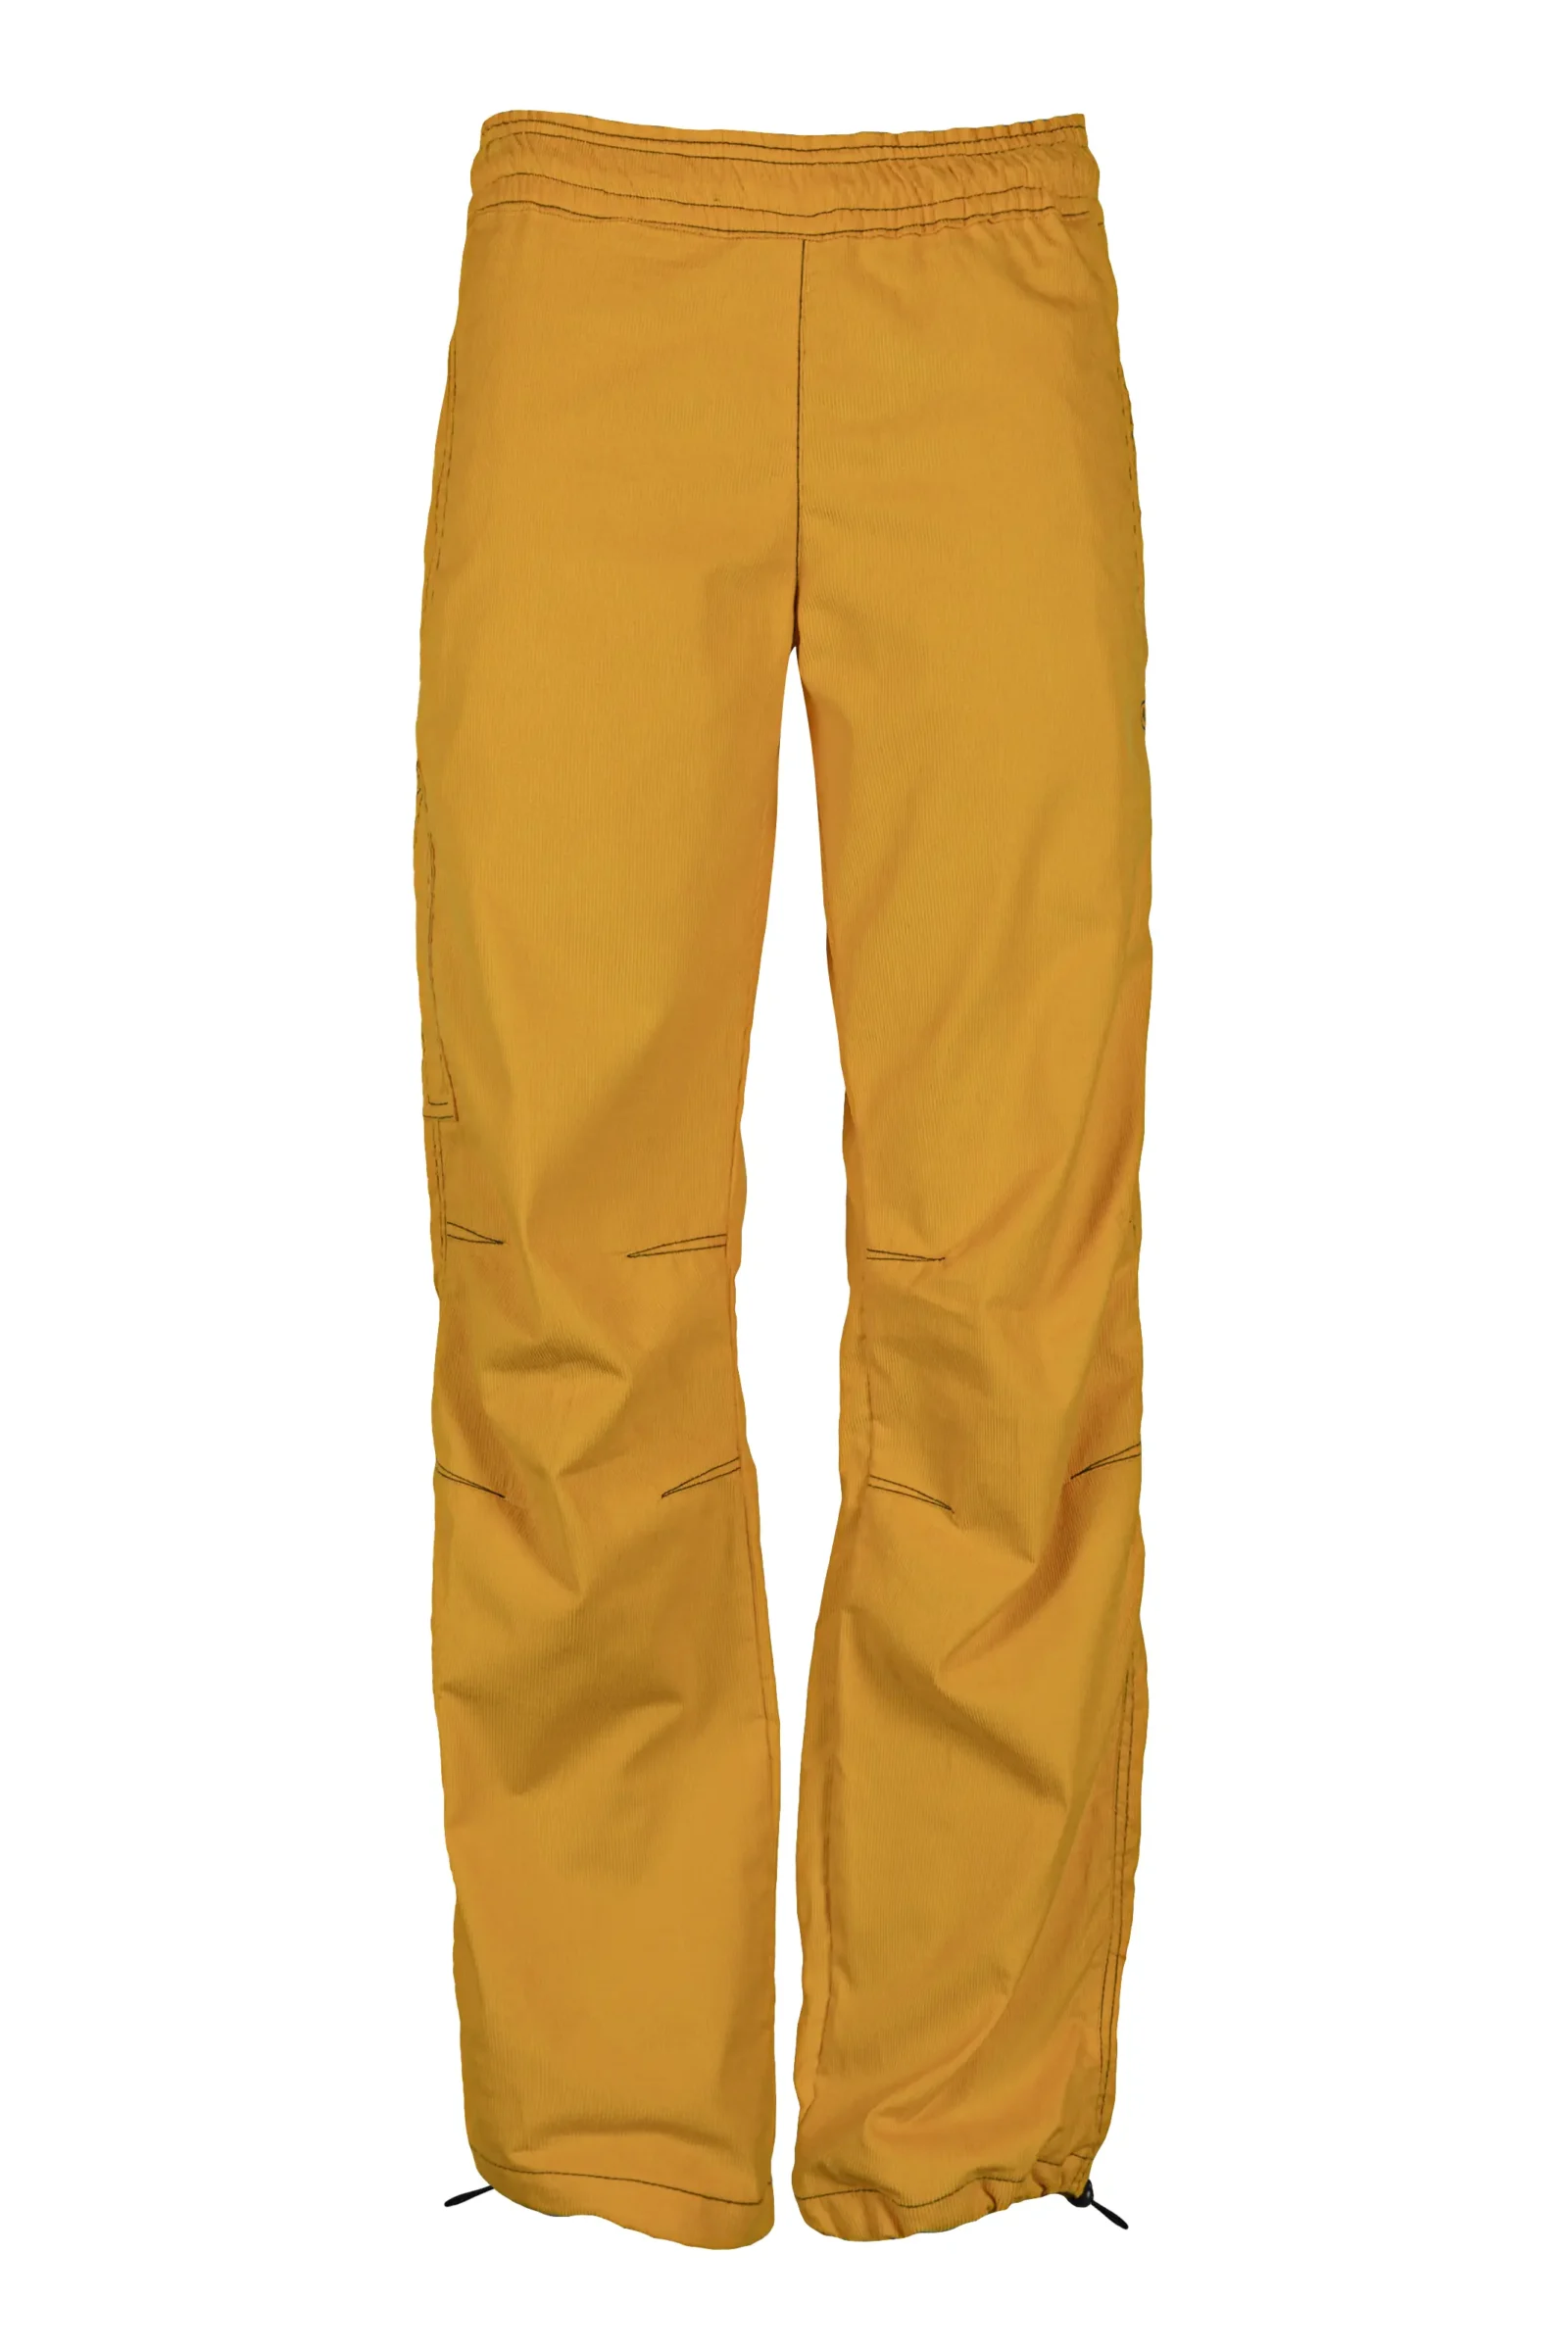 Pantalone arrampicata donna in velluto costa fine giallo - VIOLET VELVET MONVIC